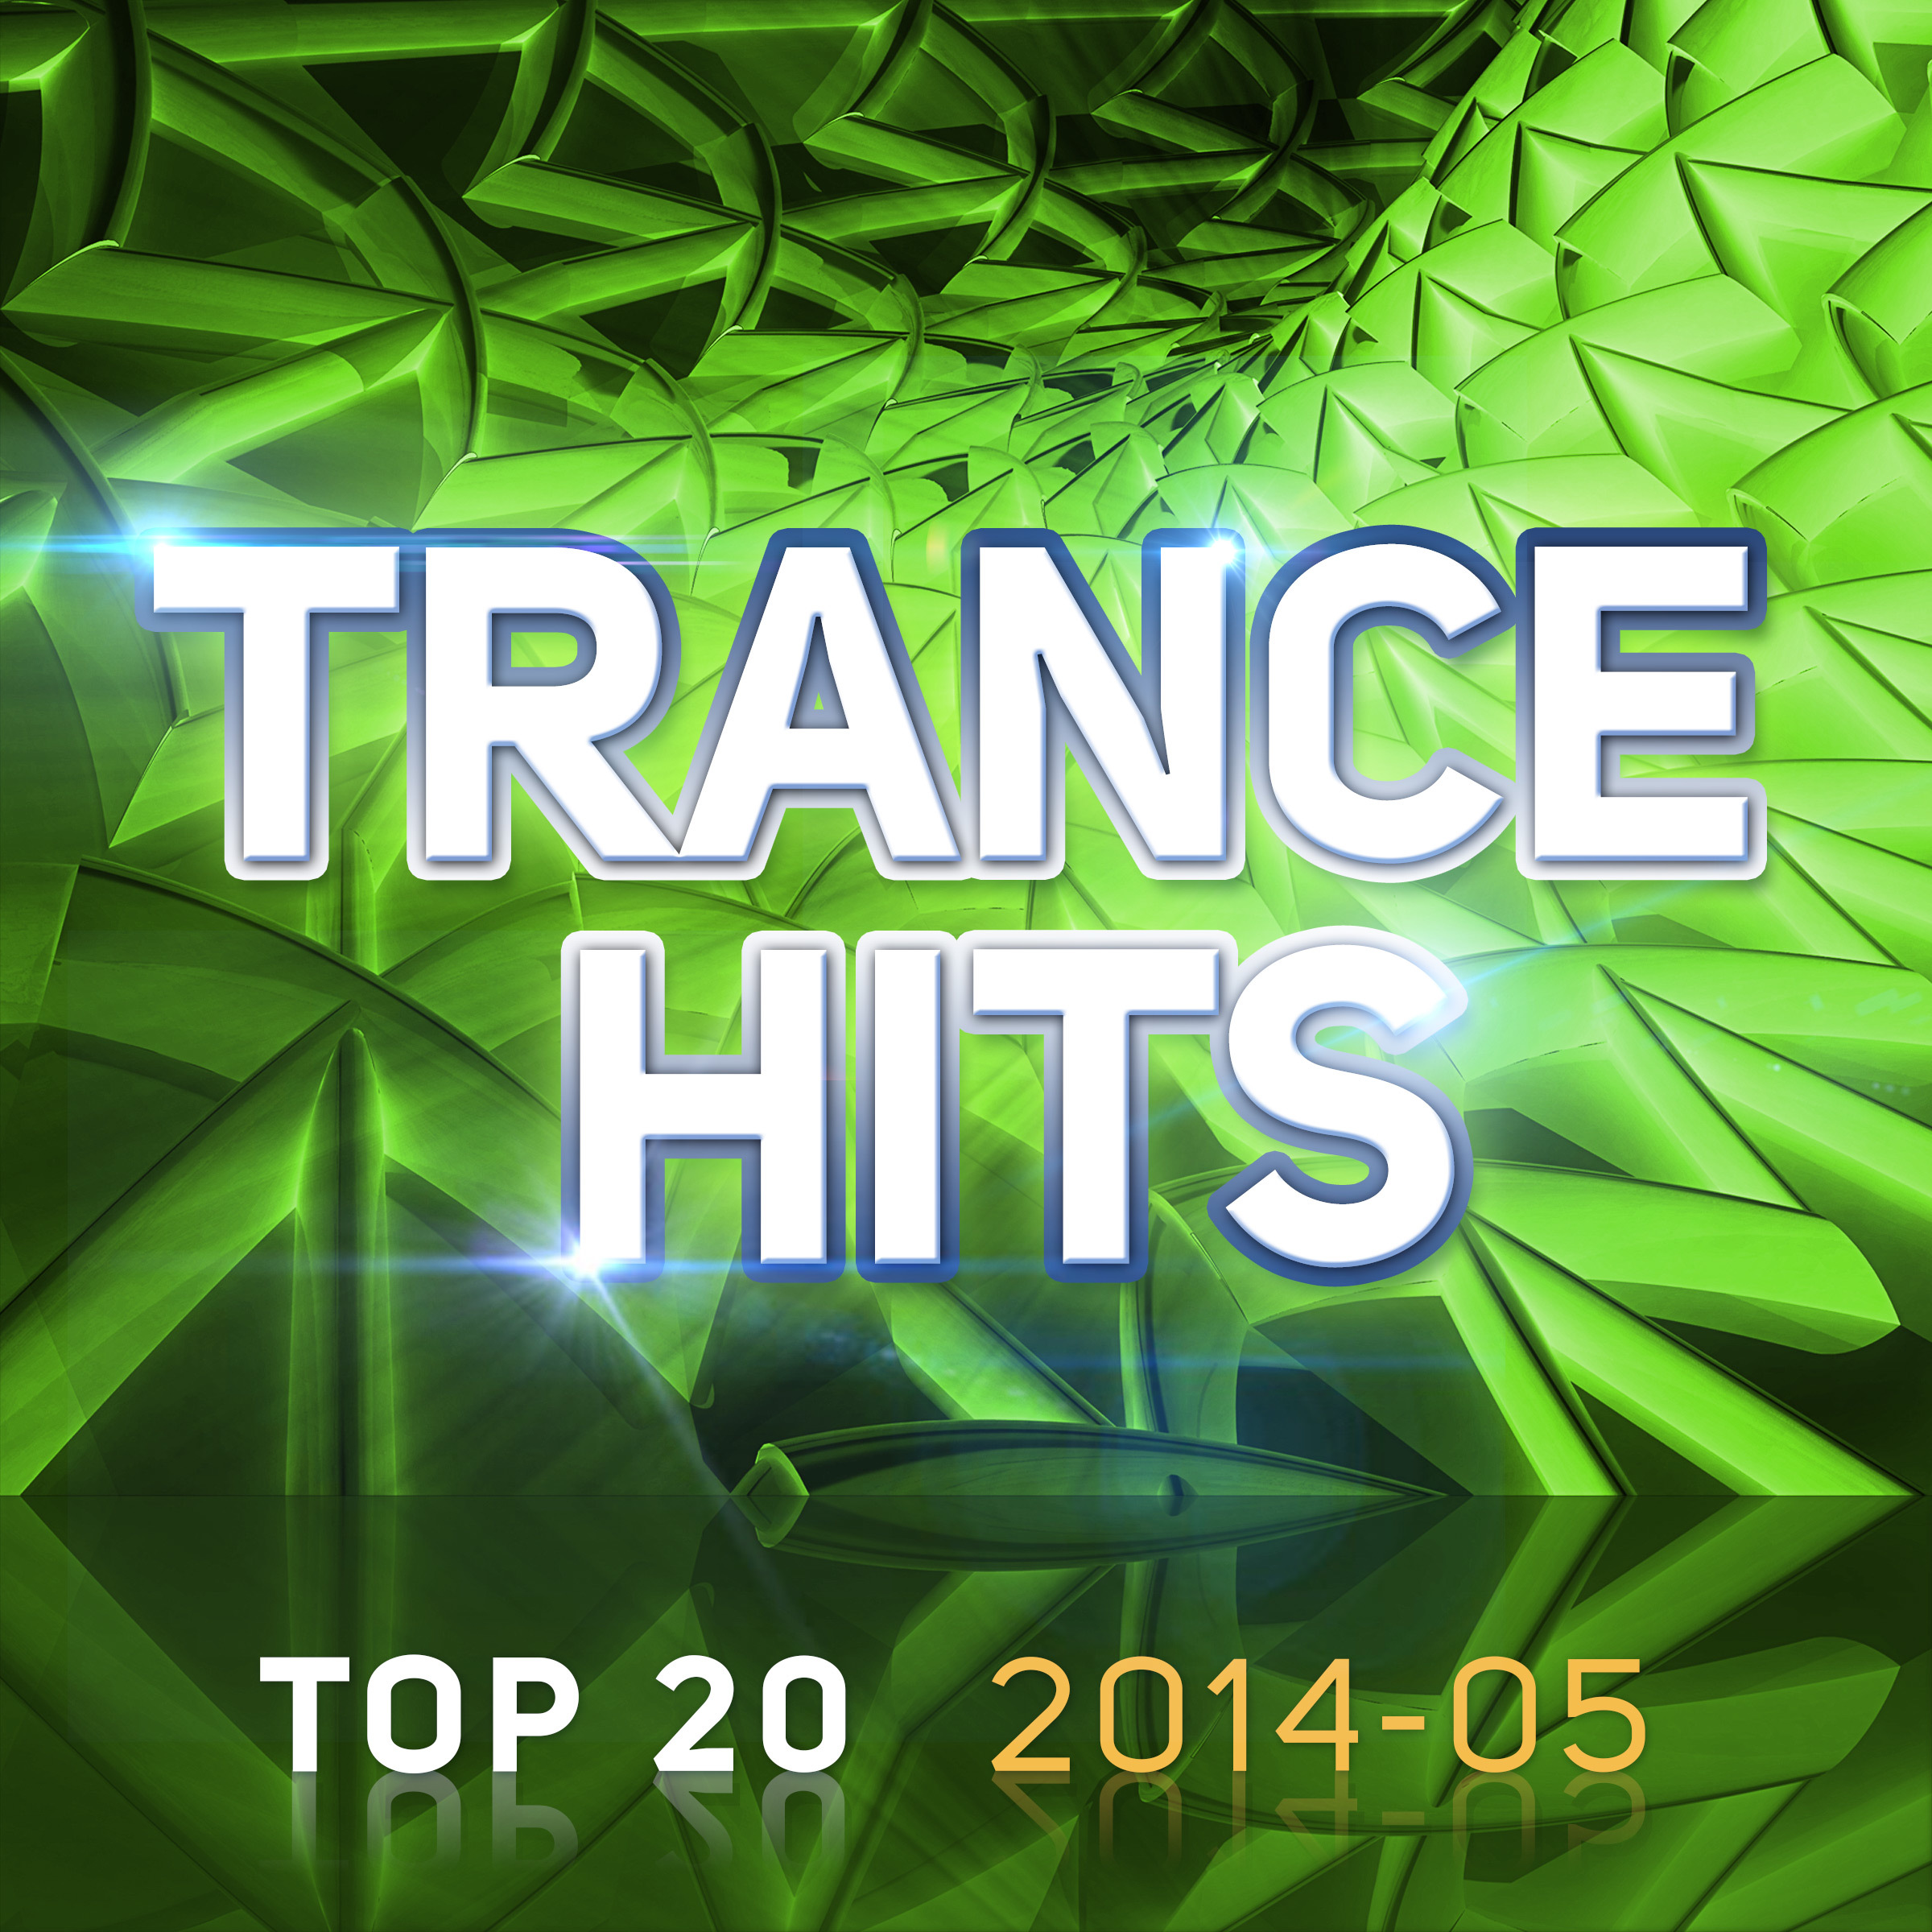 Trance Hits Top 20 - 2014-05